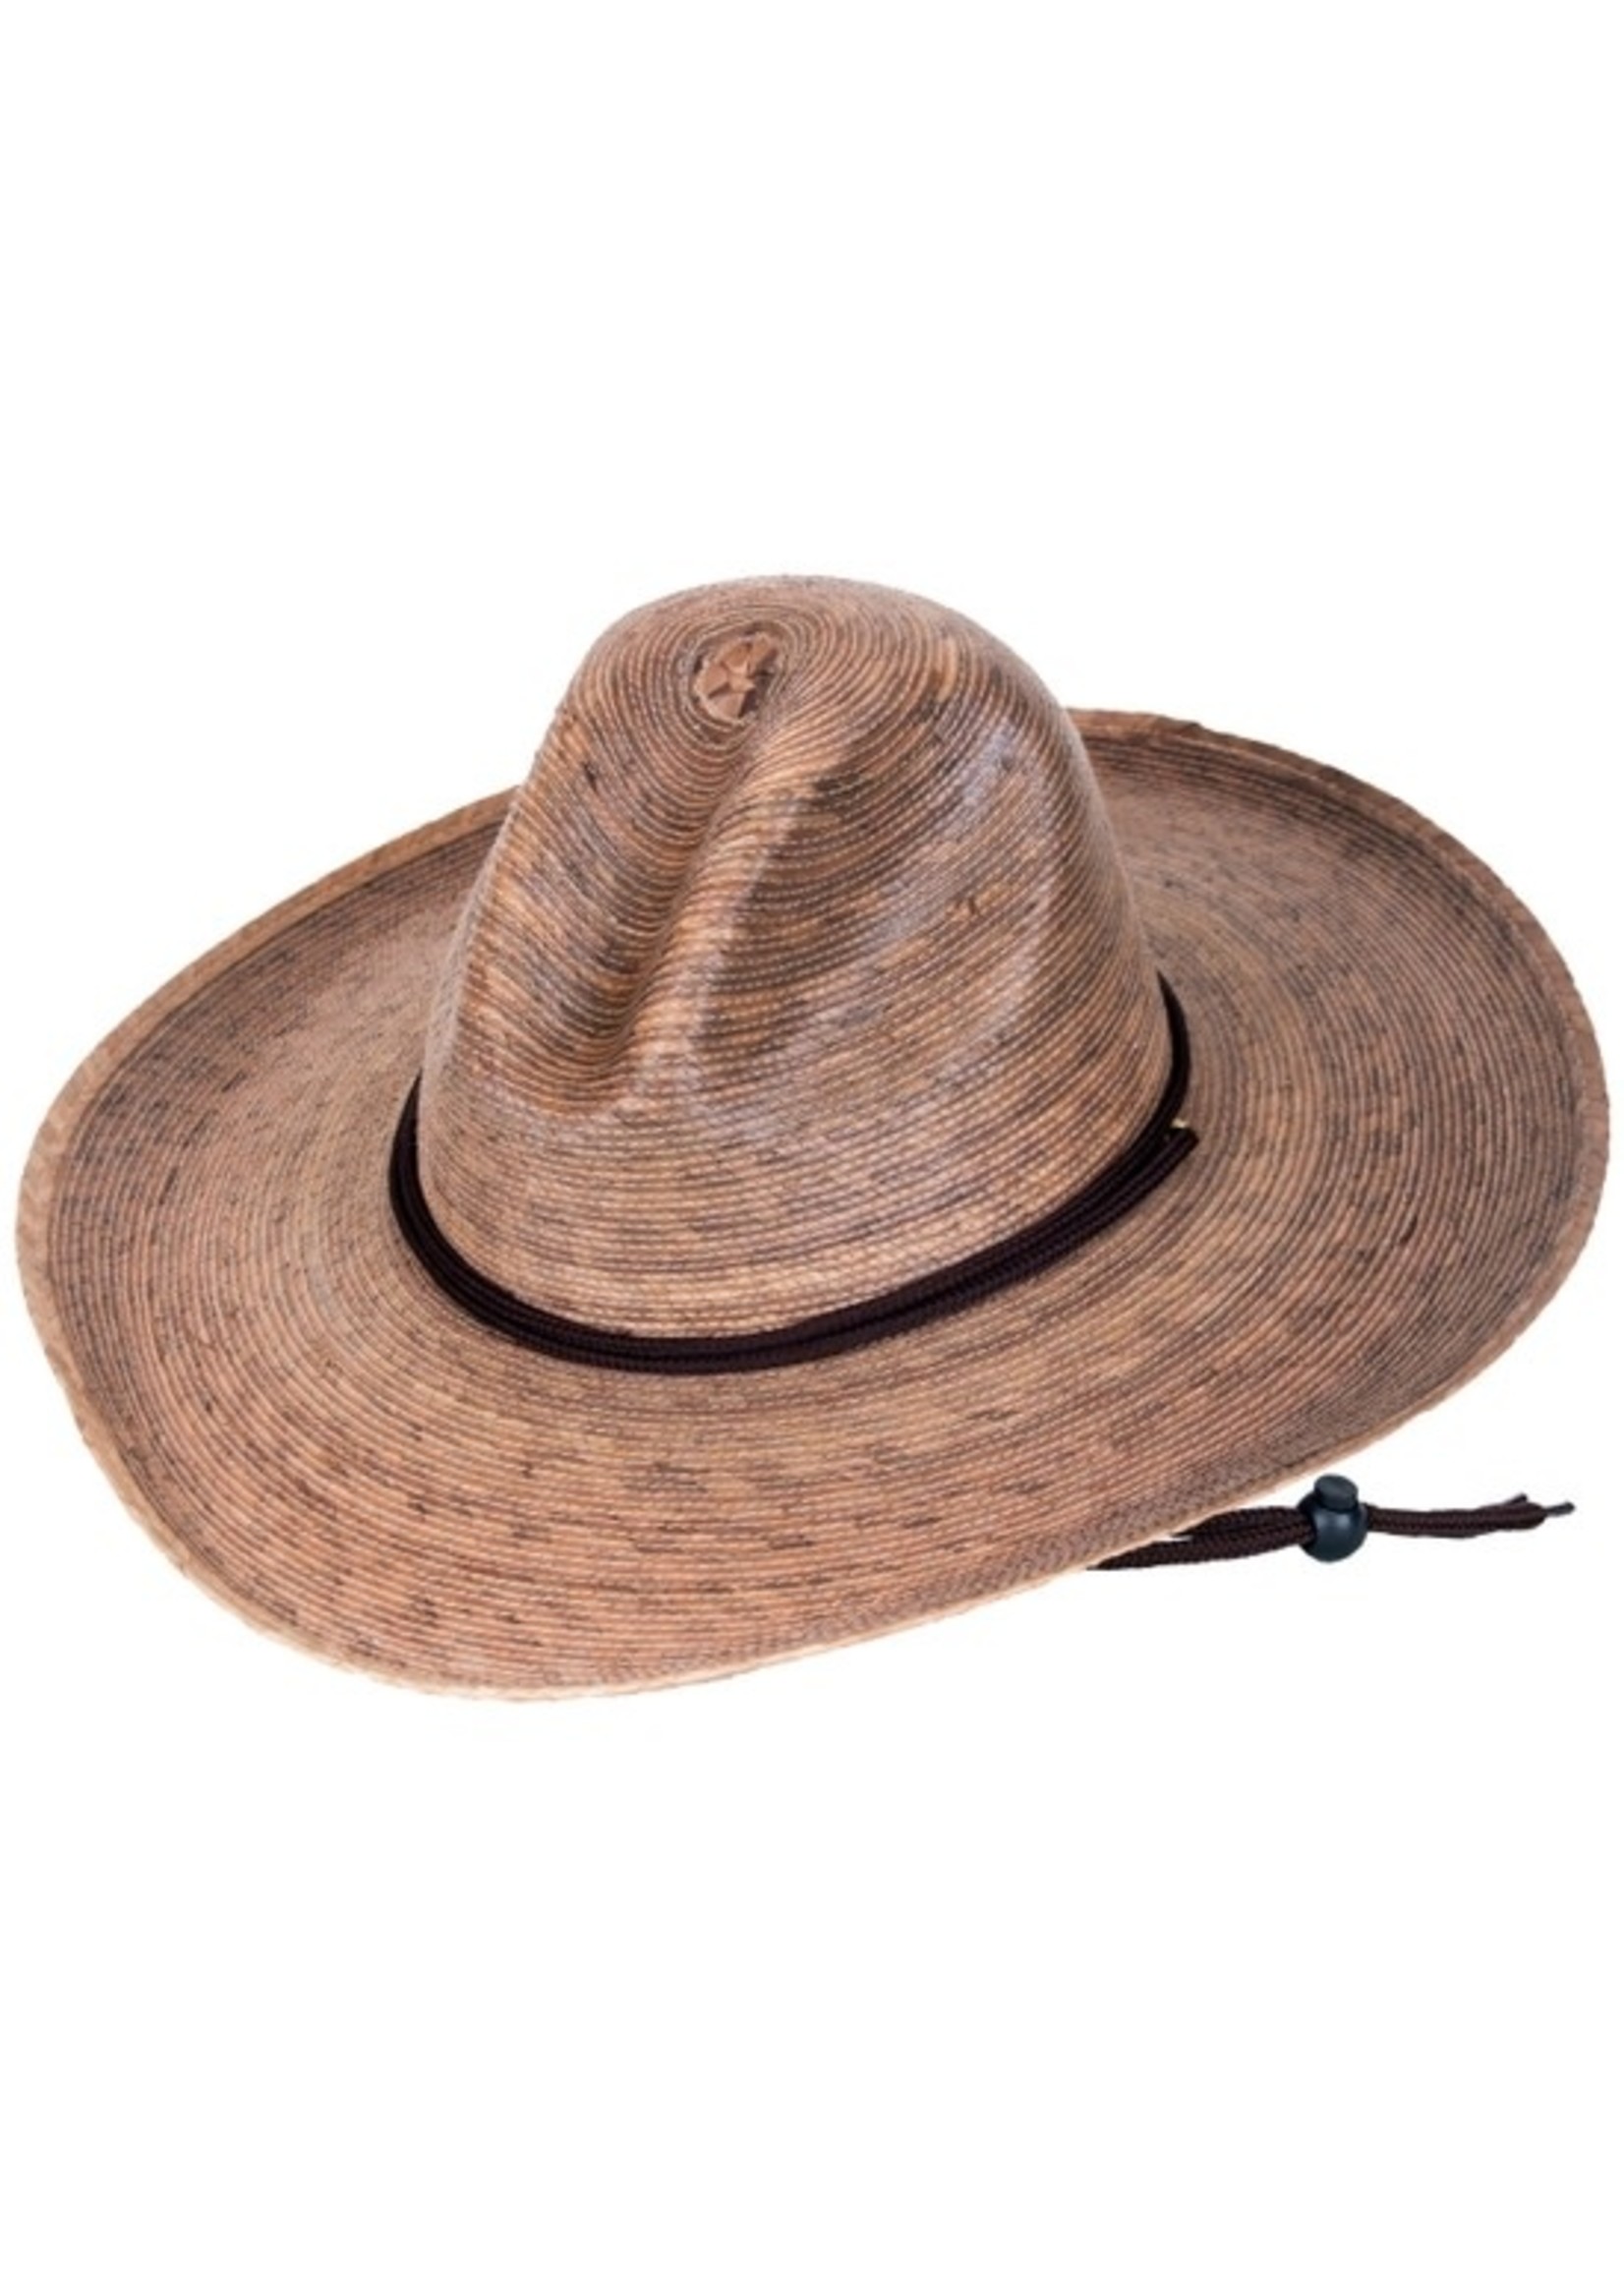 Hat - Pecos Tan